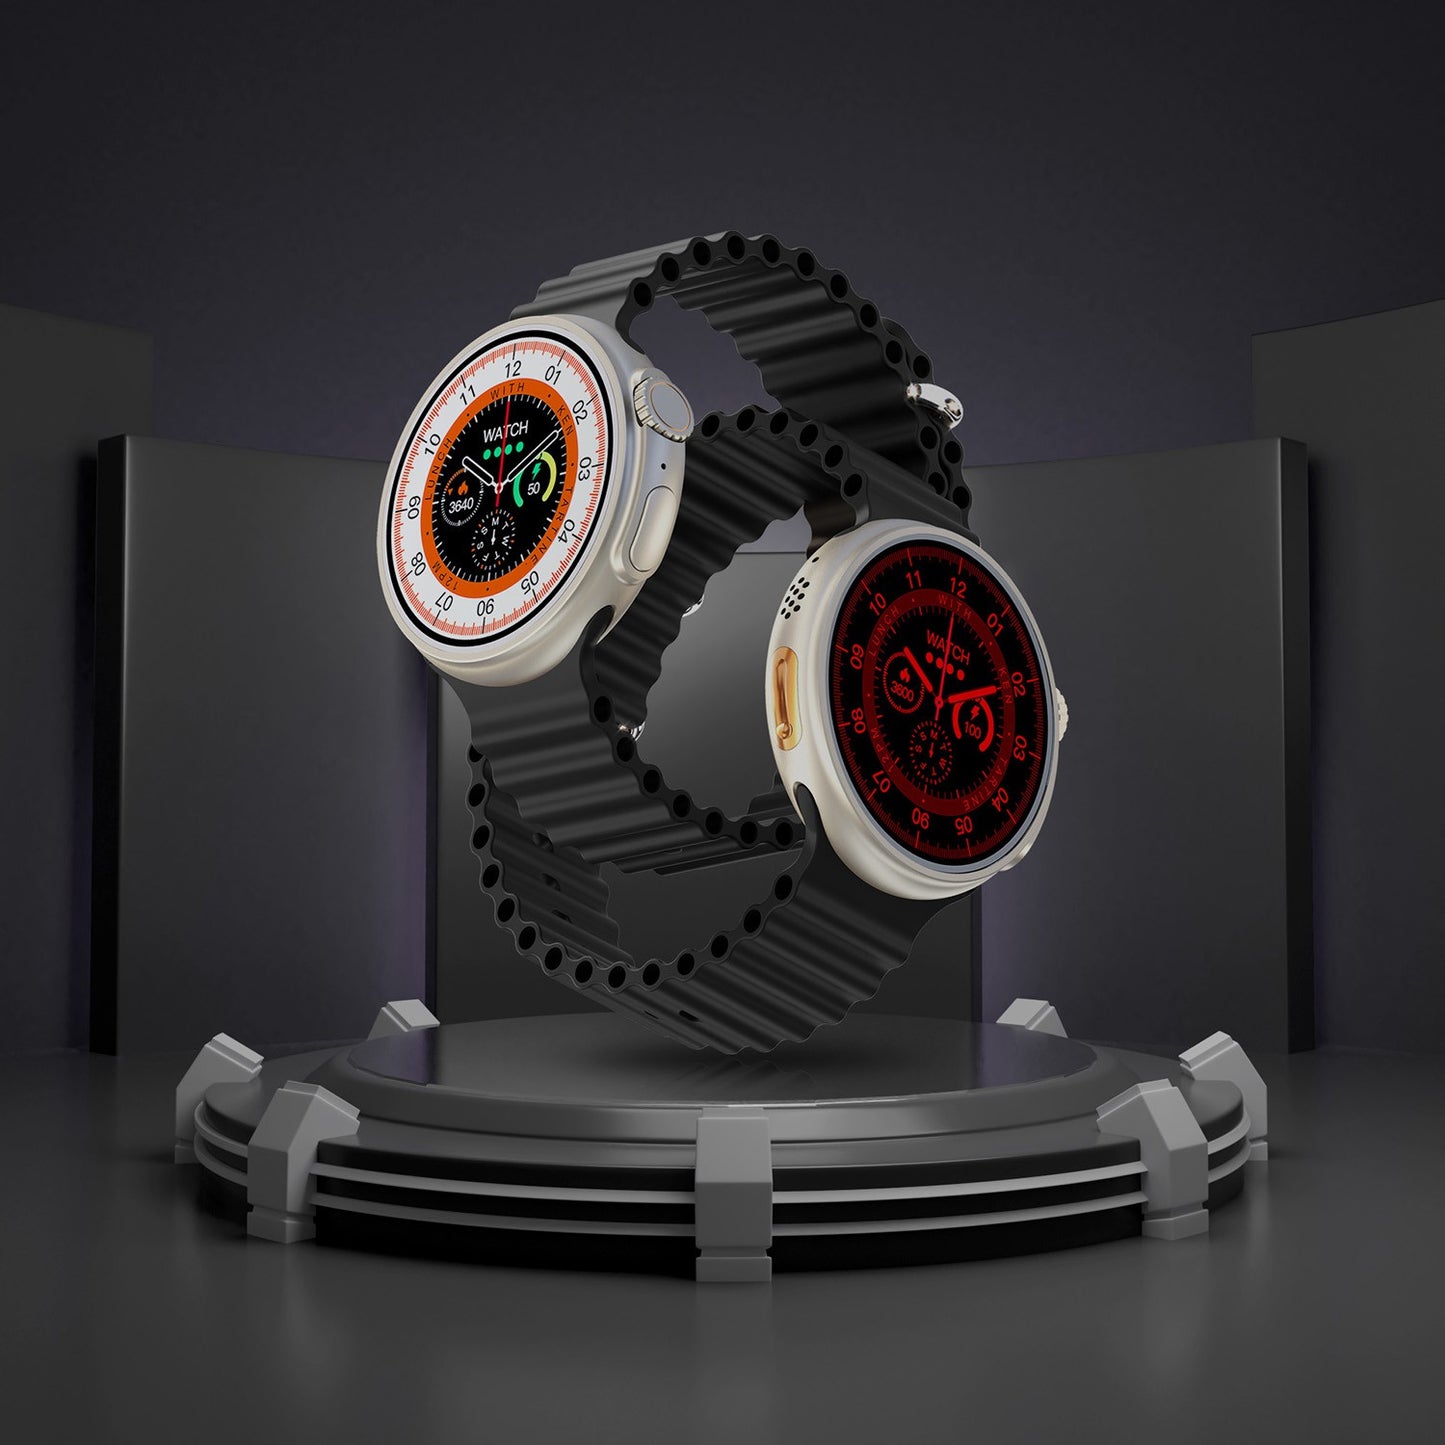 Porodo Ultra Evo Smart Watch 1.51" Wide Touch Screen - Black Strap